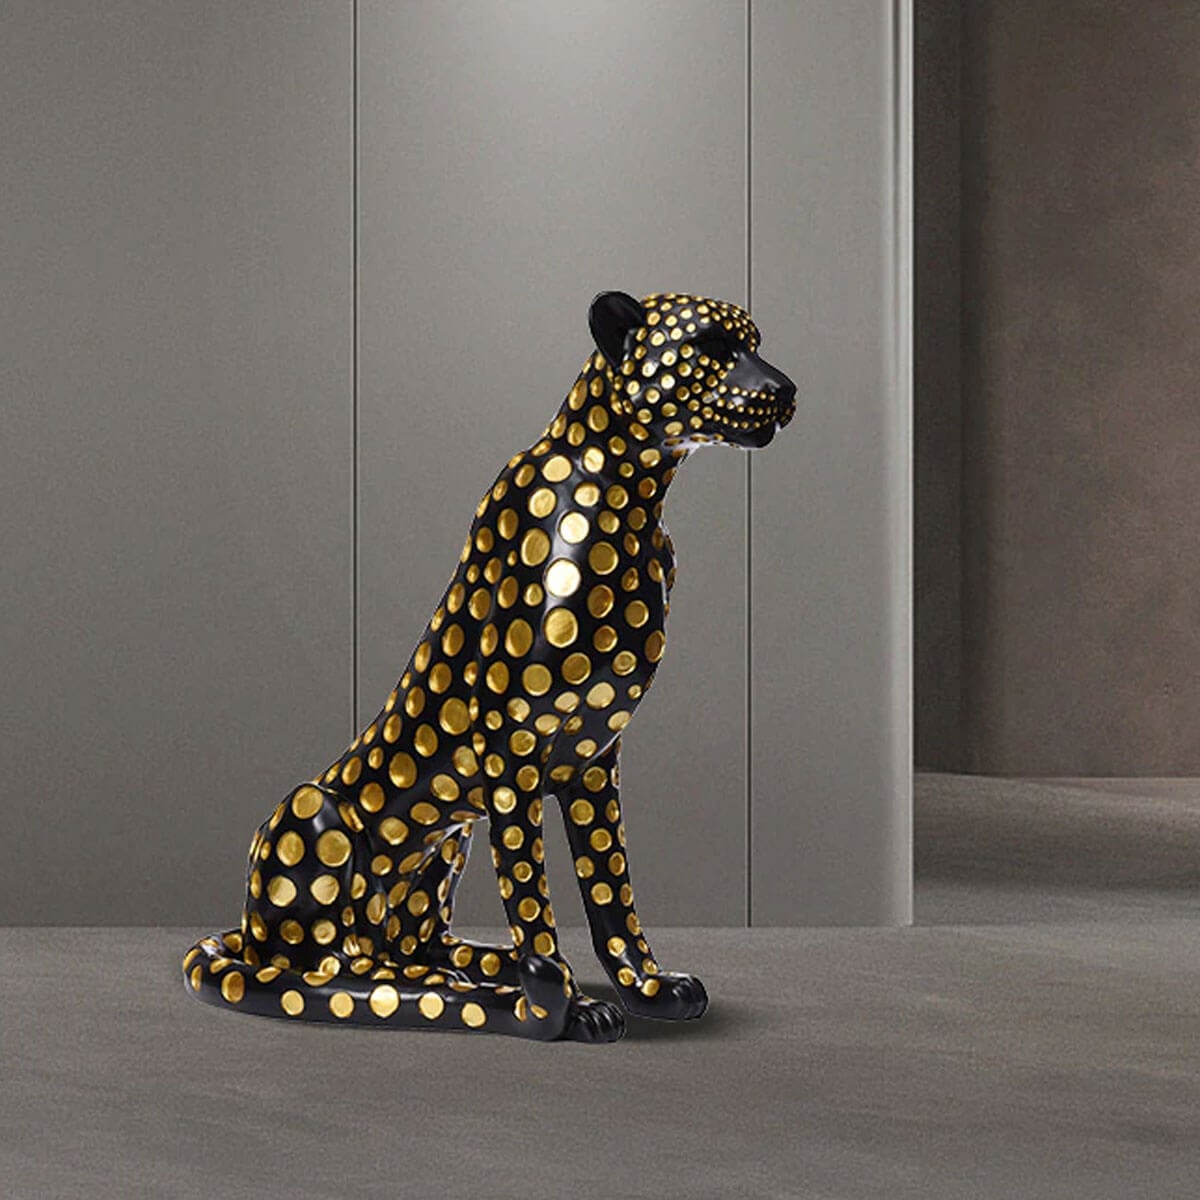 Fortune Leopard Large Floor Statue Resin Figurine Interior Animal Art